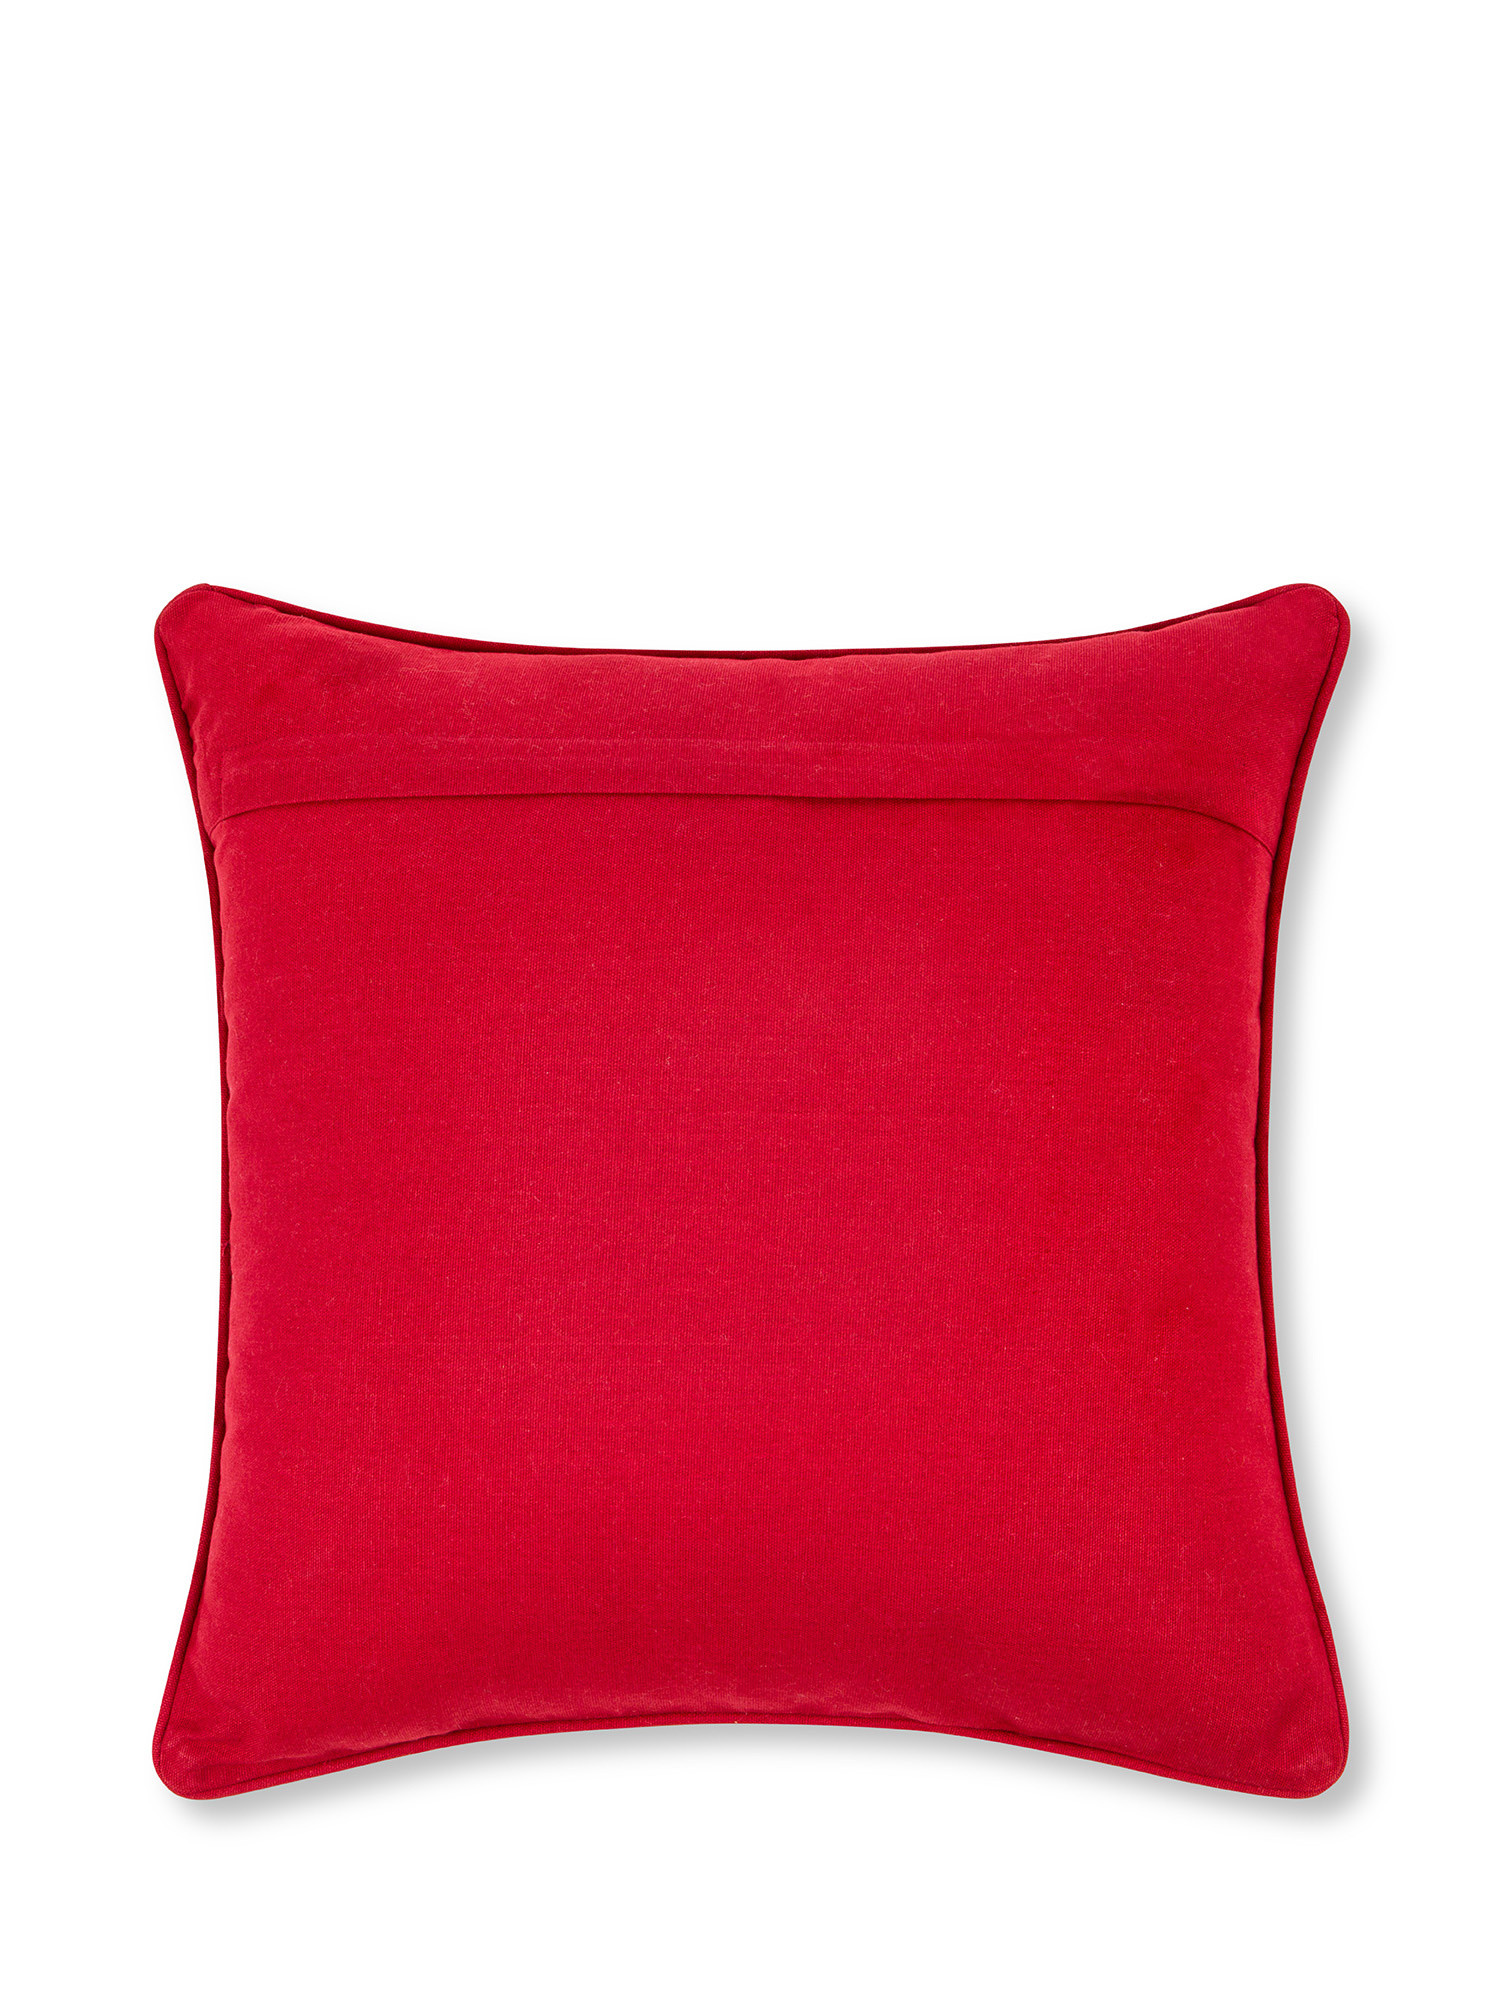 Cuscino tessuto tartan ricamato 45x45cm, Rosso, large image number 1